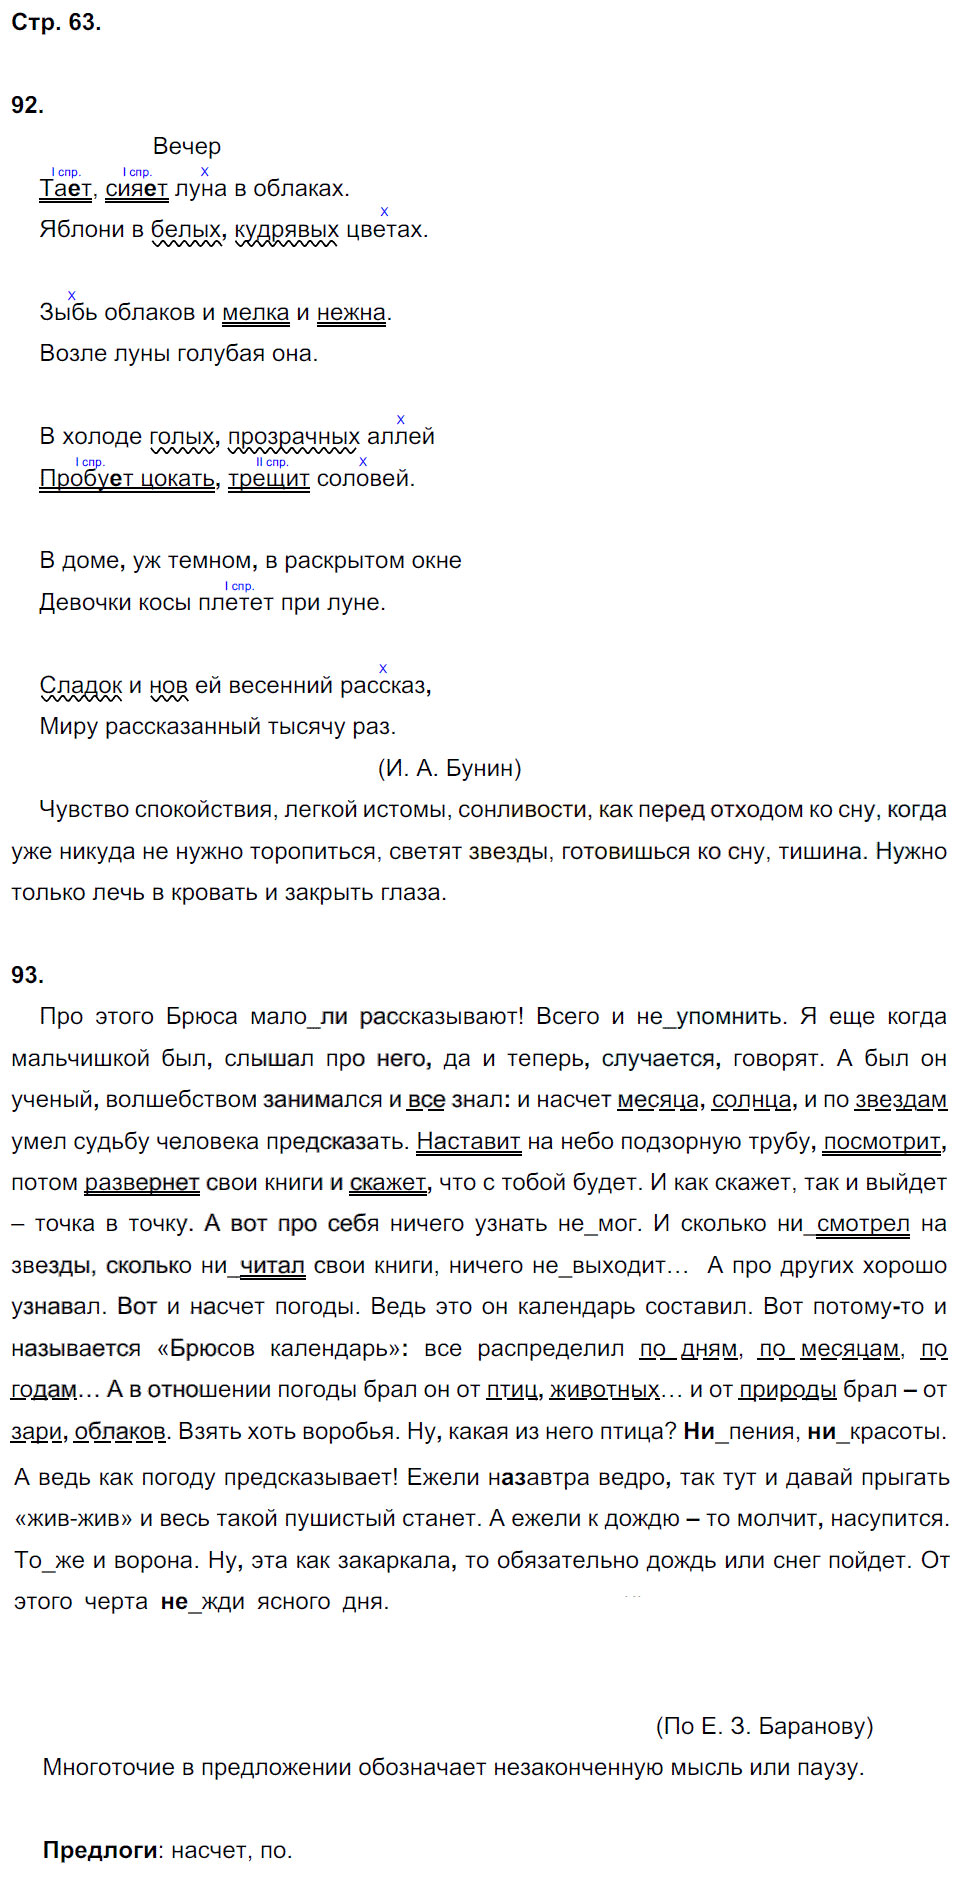 гдз 8 класс рабочая тетрадь страница 63 русский язык Кулаева